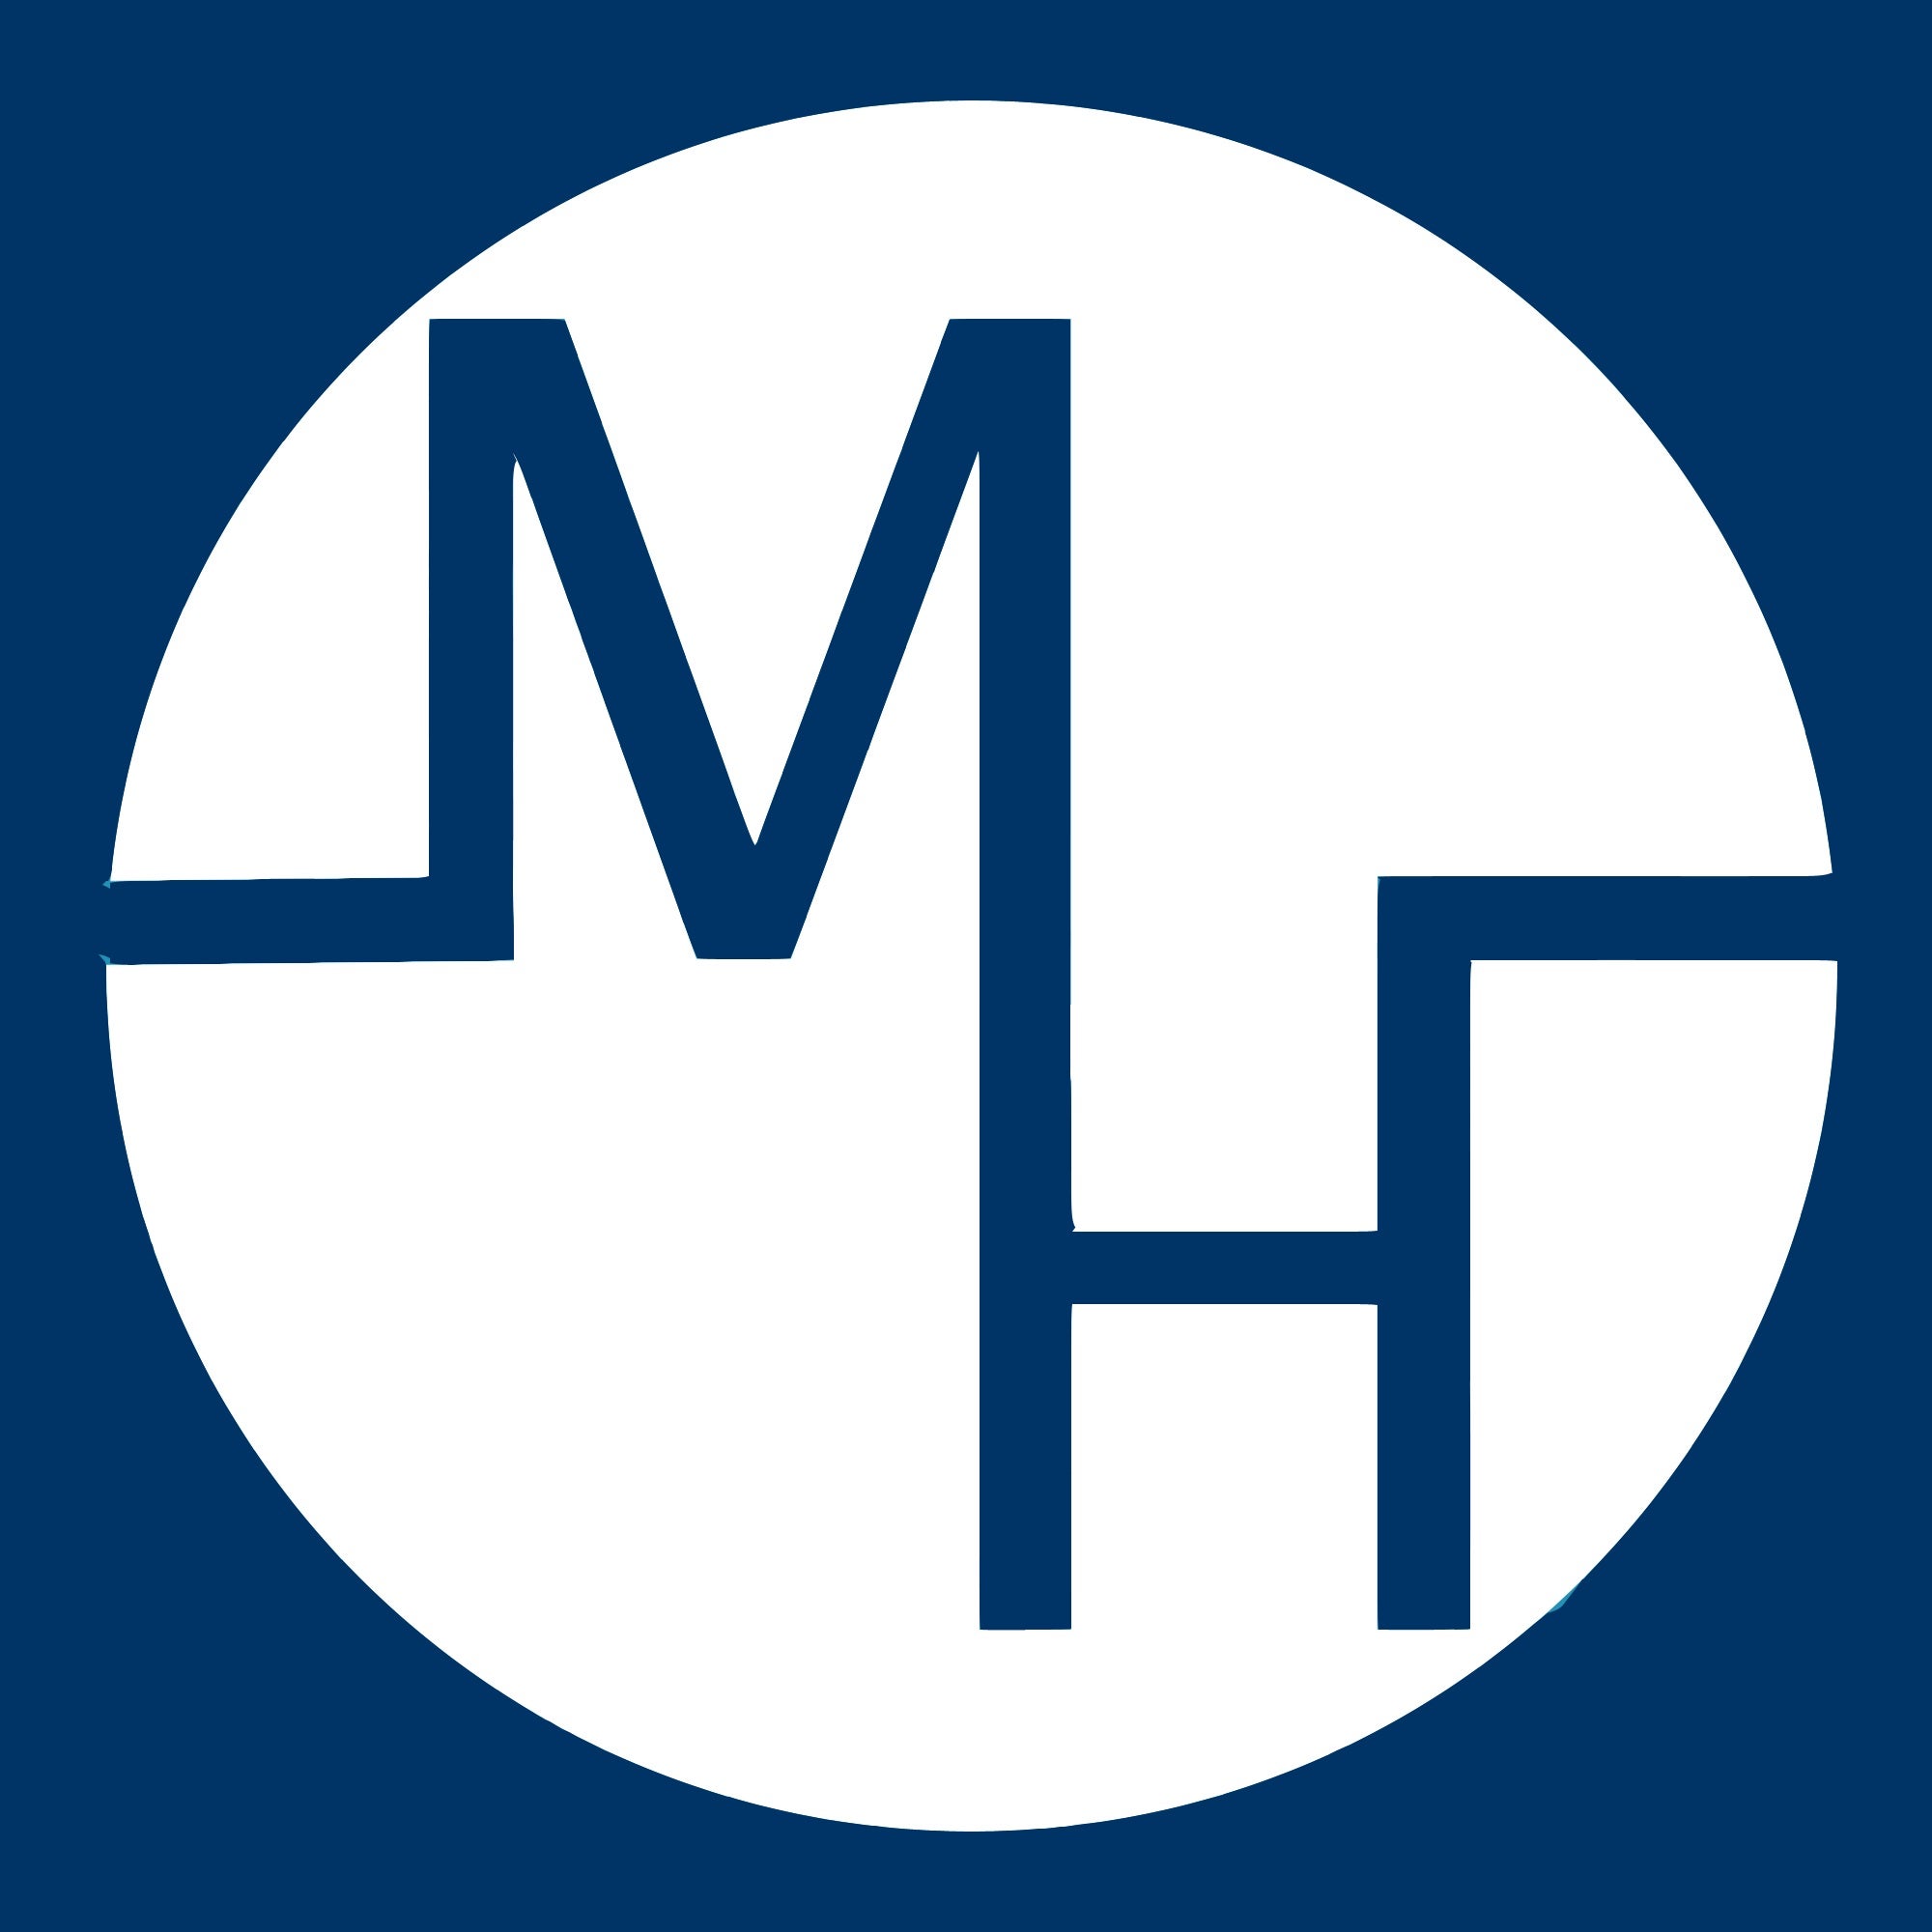 Medella Health logo